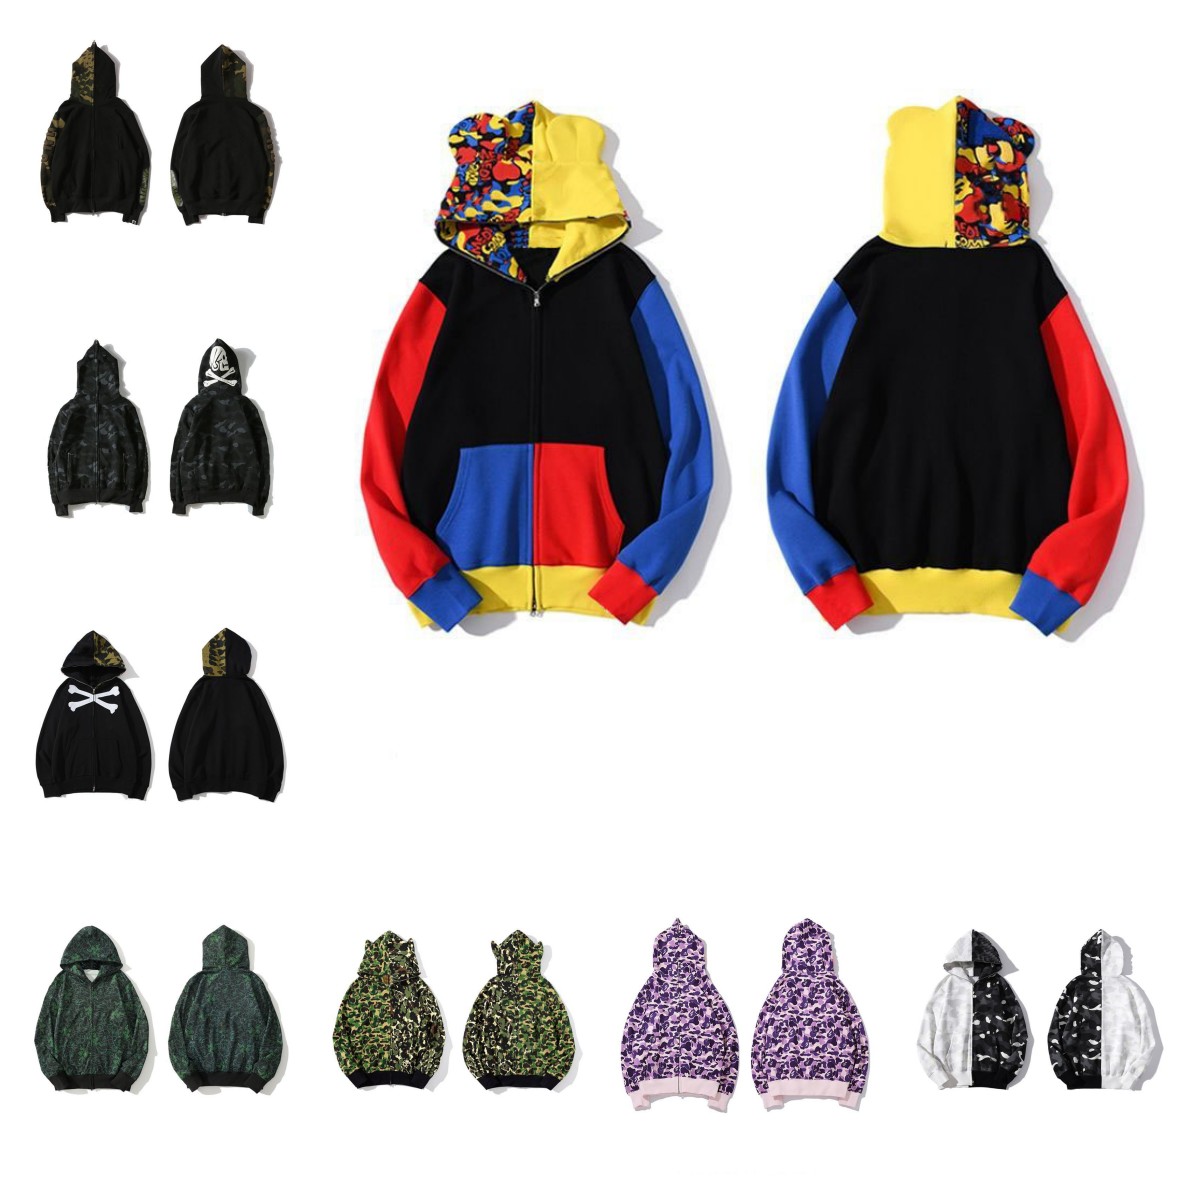 

2022 Mens Women Designer shark hoodies Autumn Winter Camouflage zip up hoodies Jacket Hoodie Sweatshirts size S-XXXL, I need see other product